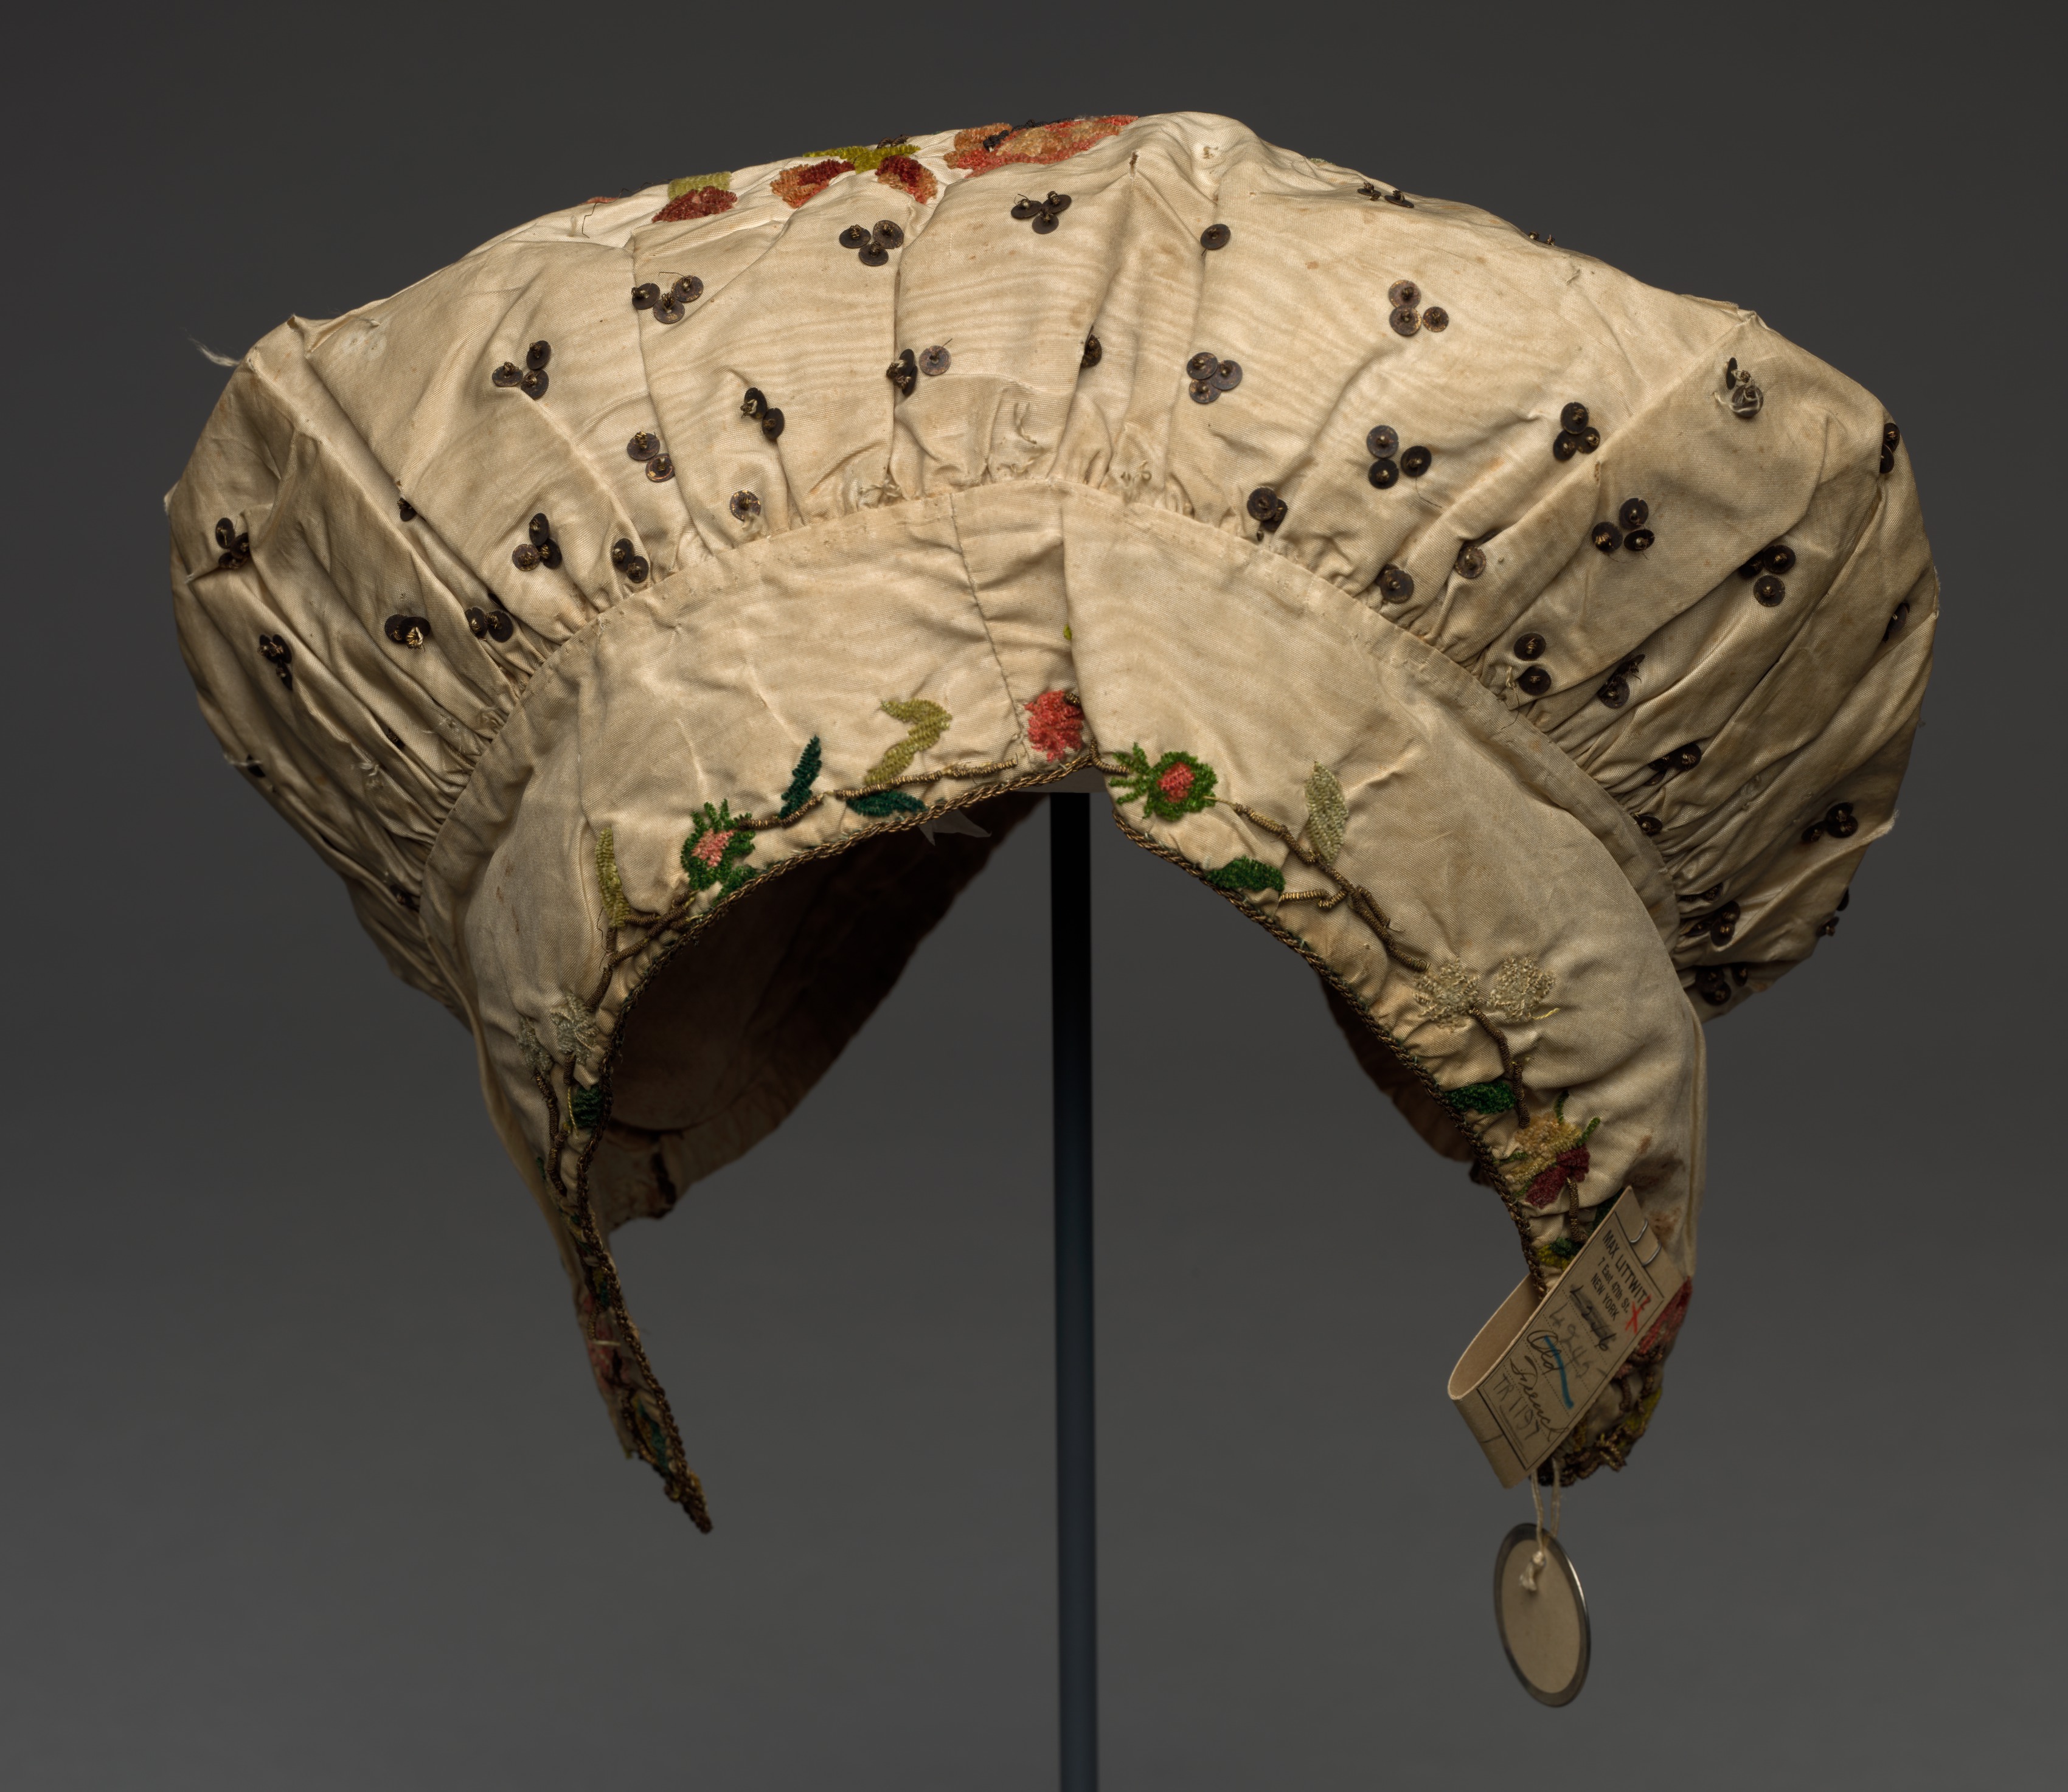 File:France, 18th century - Headdress - 1919.846 - Cleveland Museum of Art.jpg - Wikimedia Commons